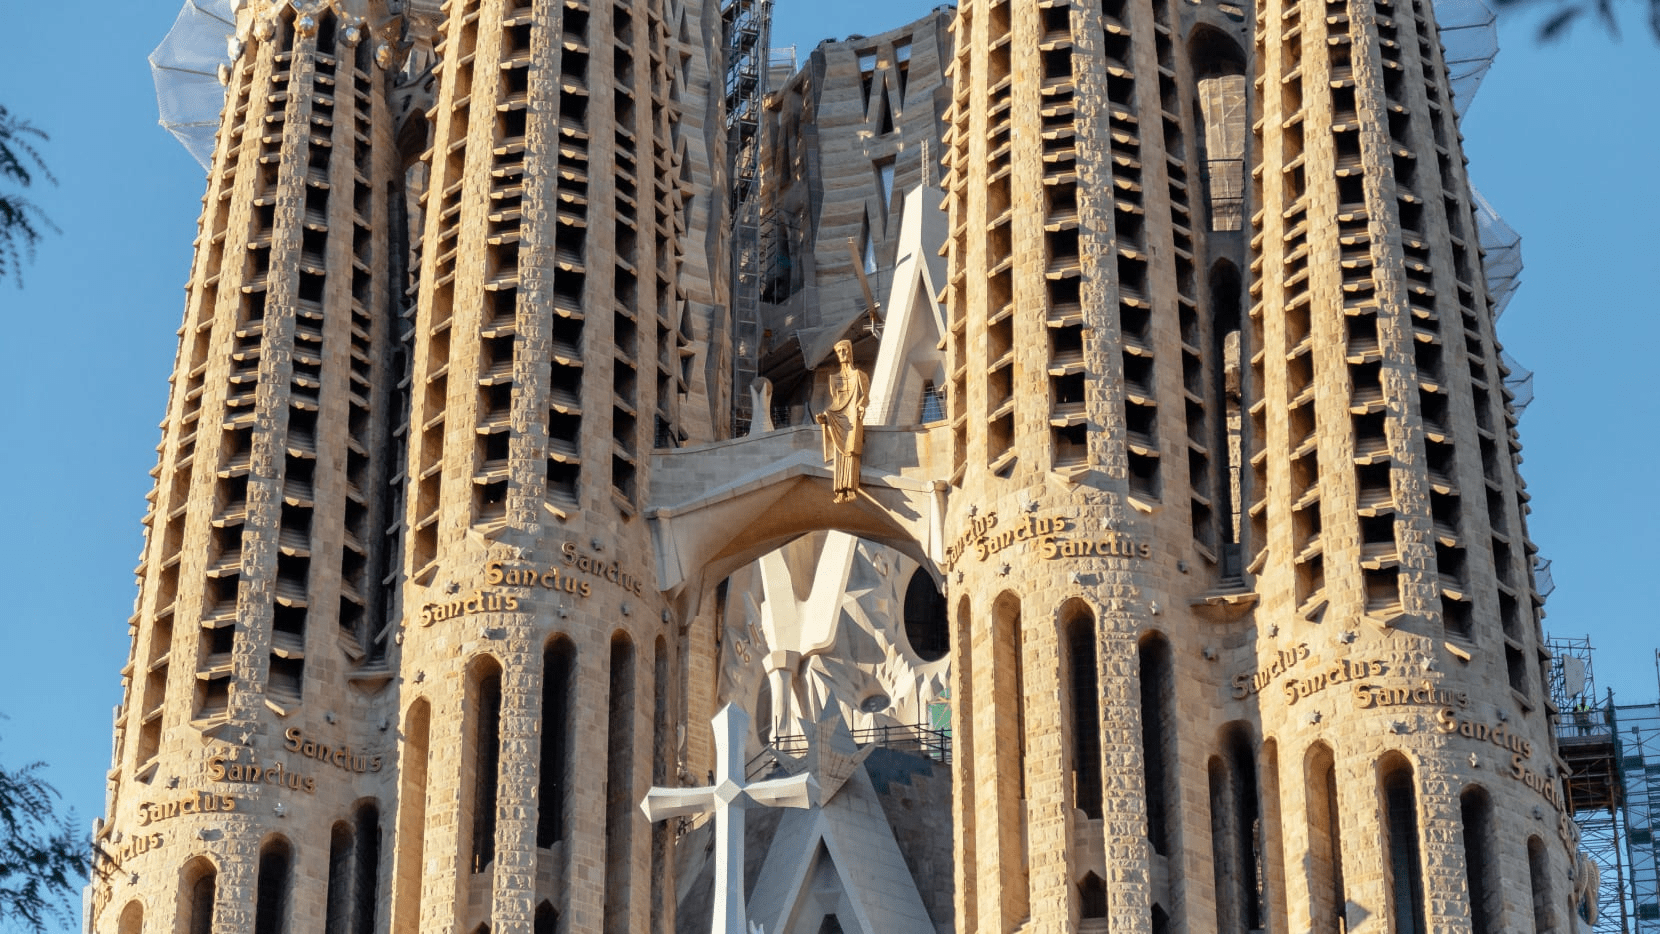 Sagrada Familia by Gaudi - Basilica in Barcelona, Spain - 137 Year Project 47